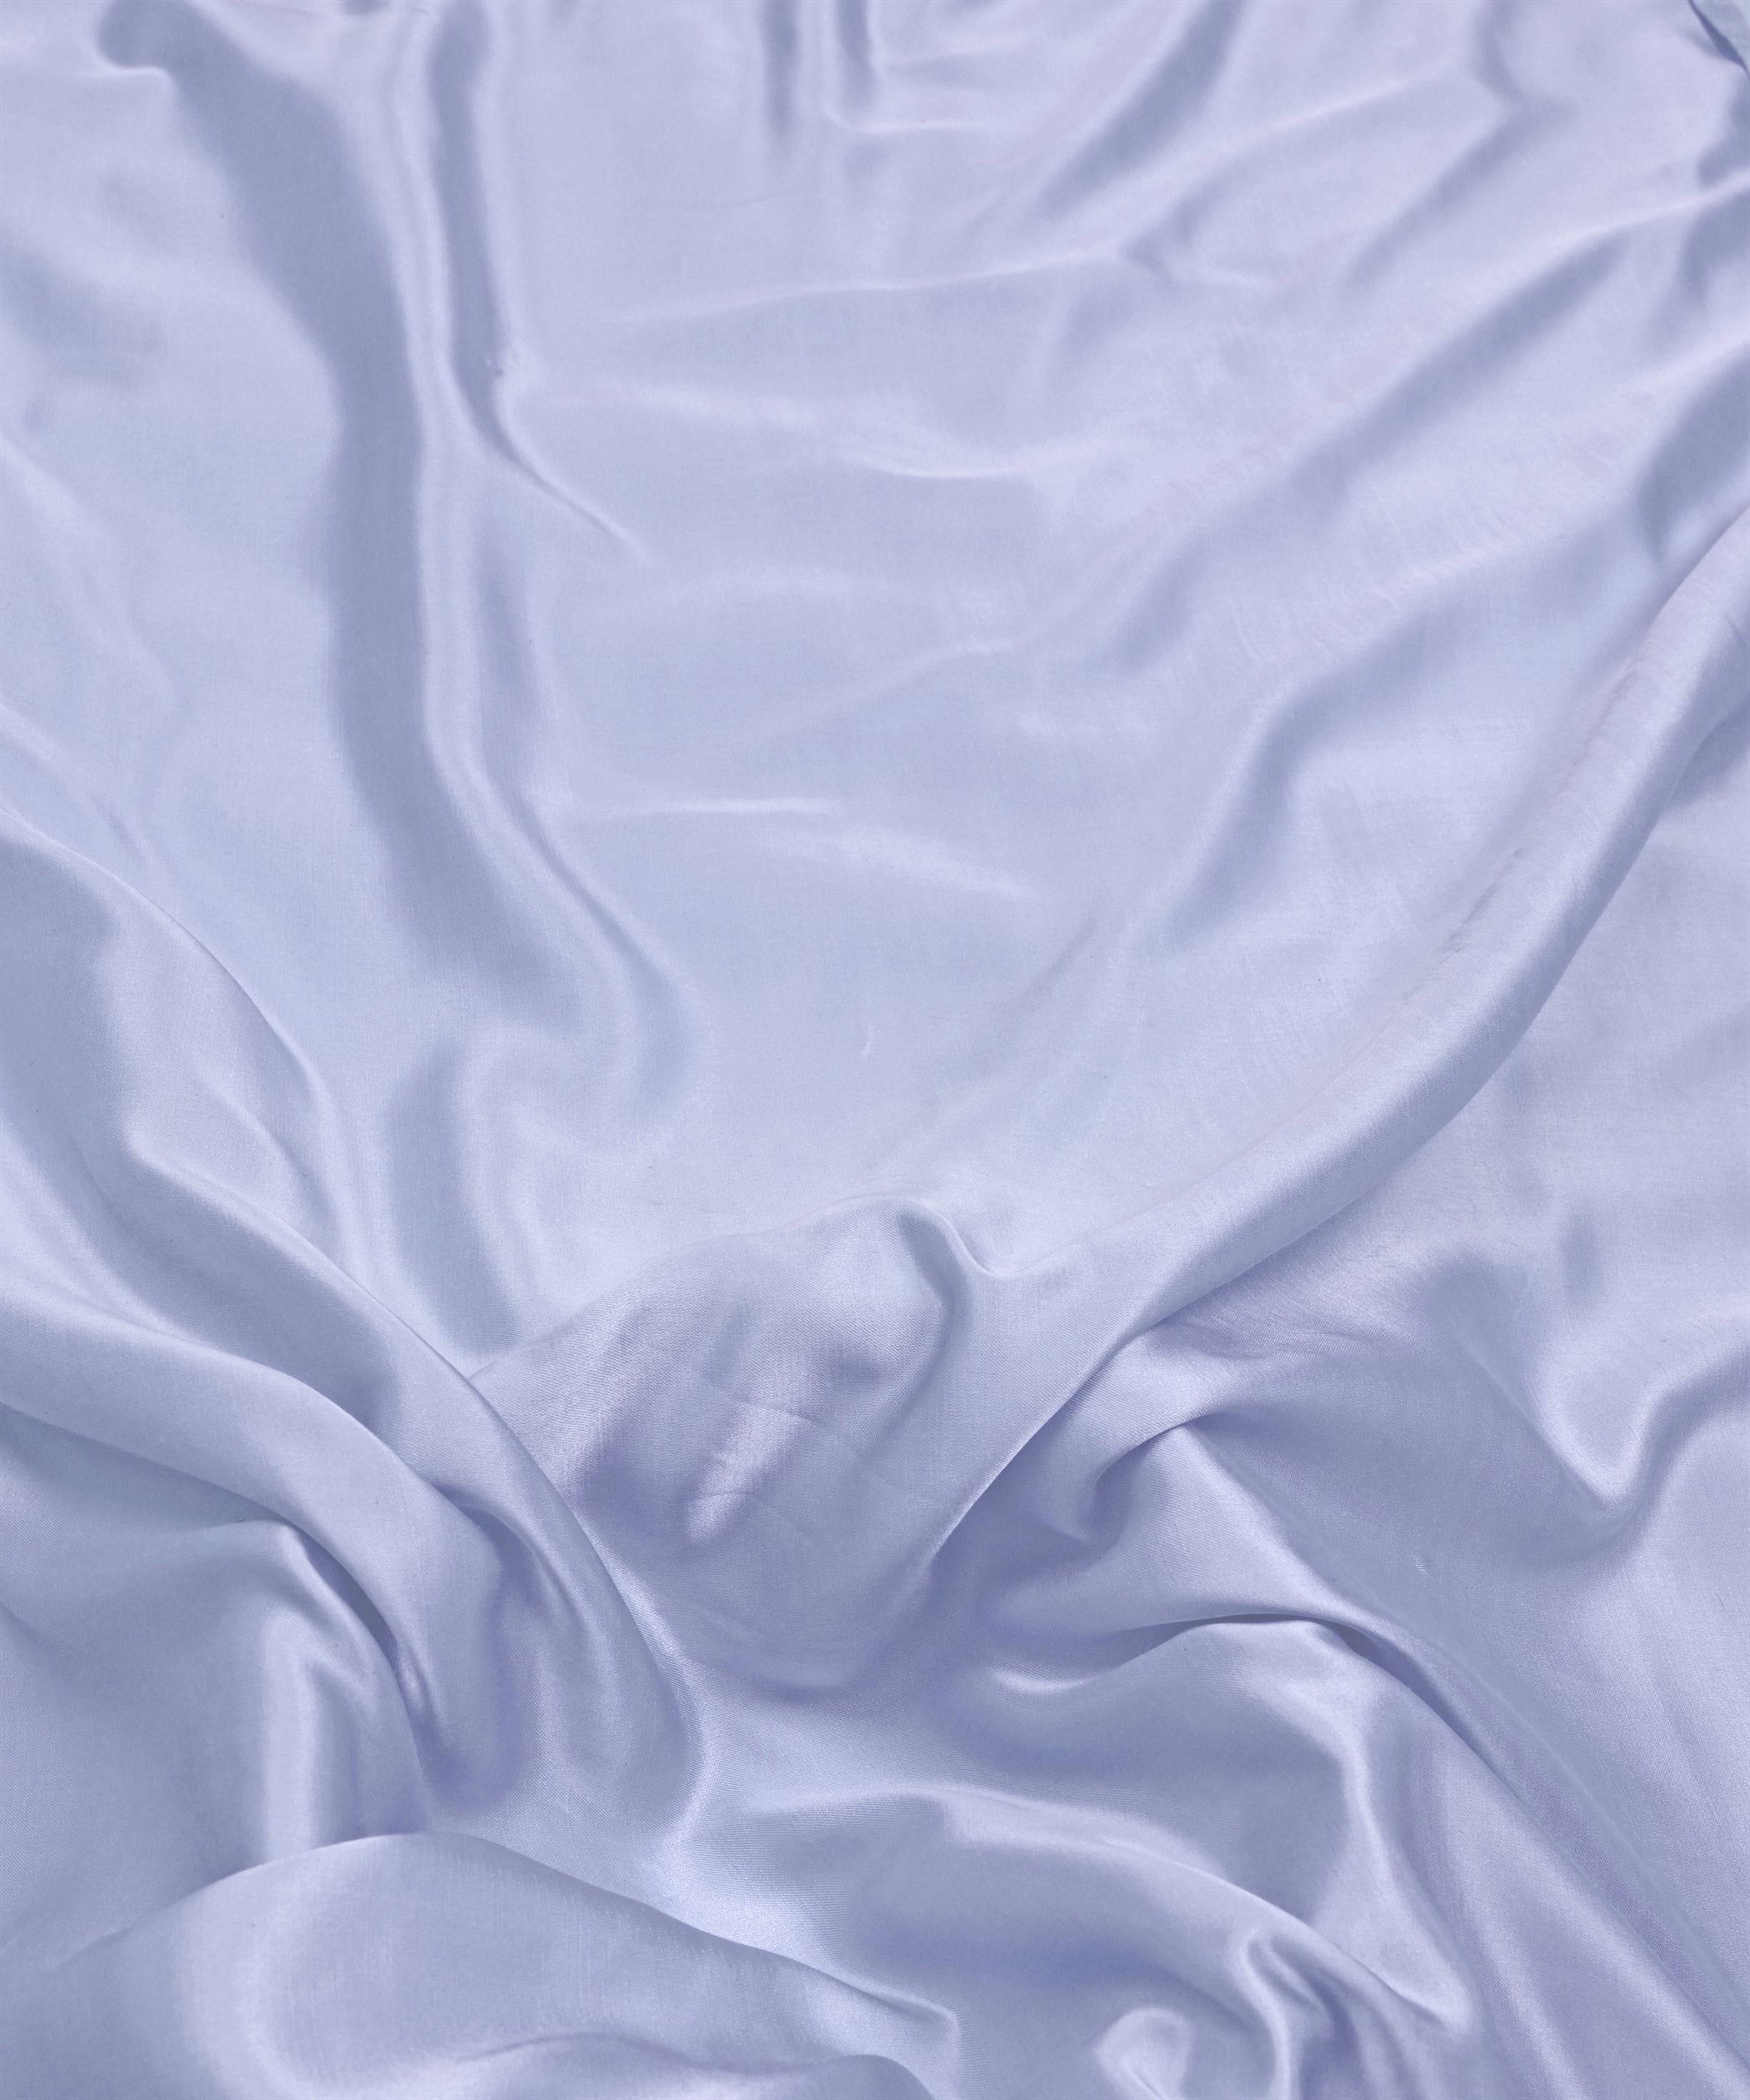 Lily Lavender Plain Dyed Modal Satin Fabric